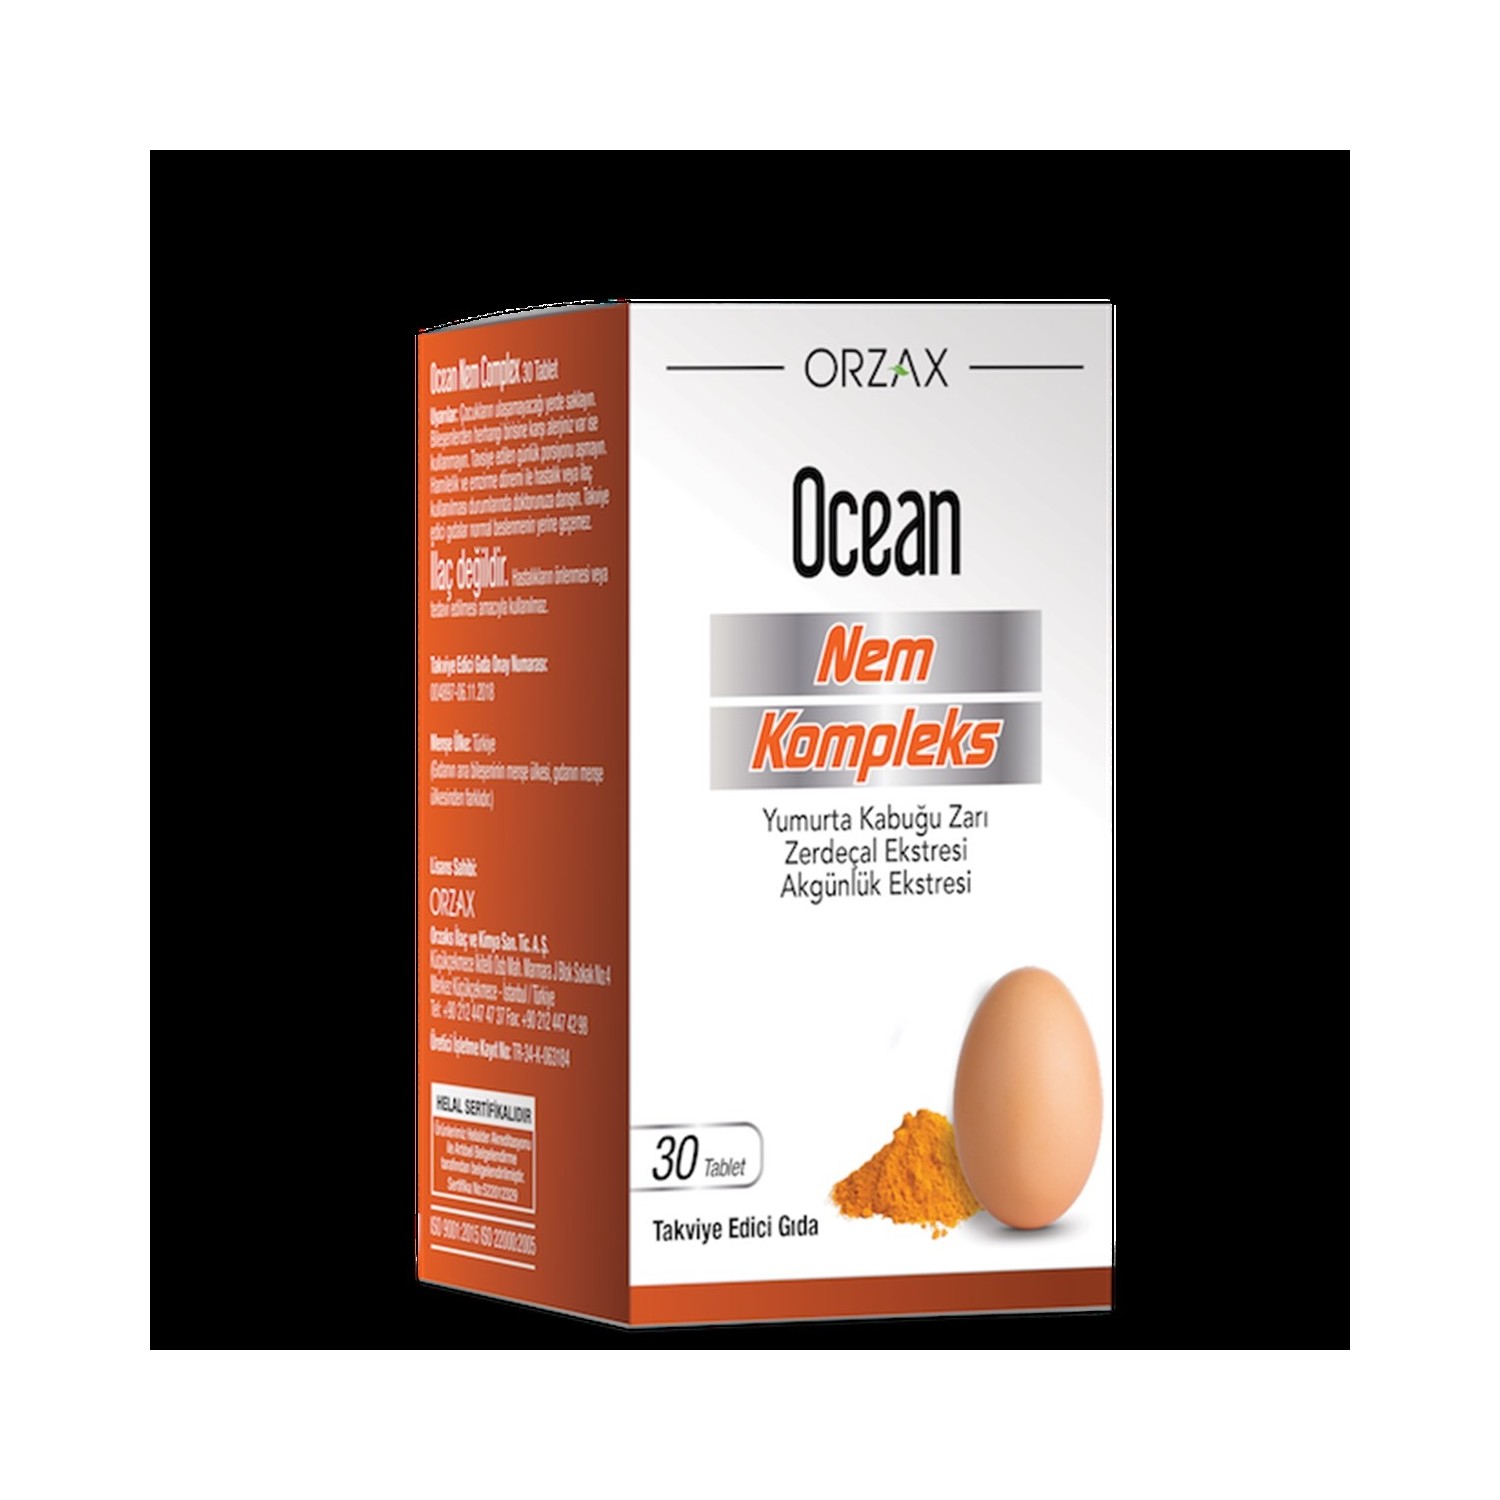 Увлажняющий комплекс Ocean Orzax, 30 таблеток